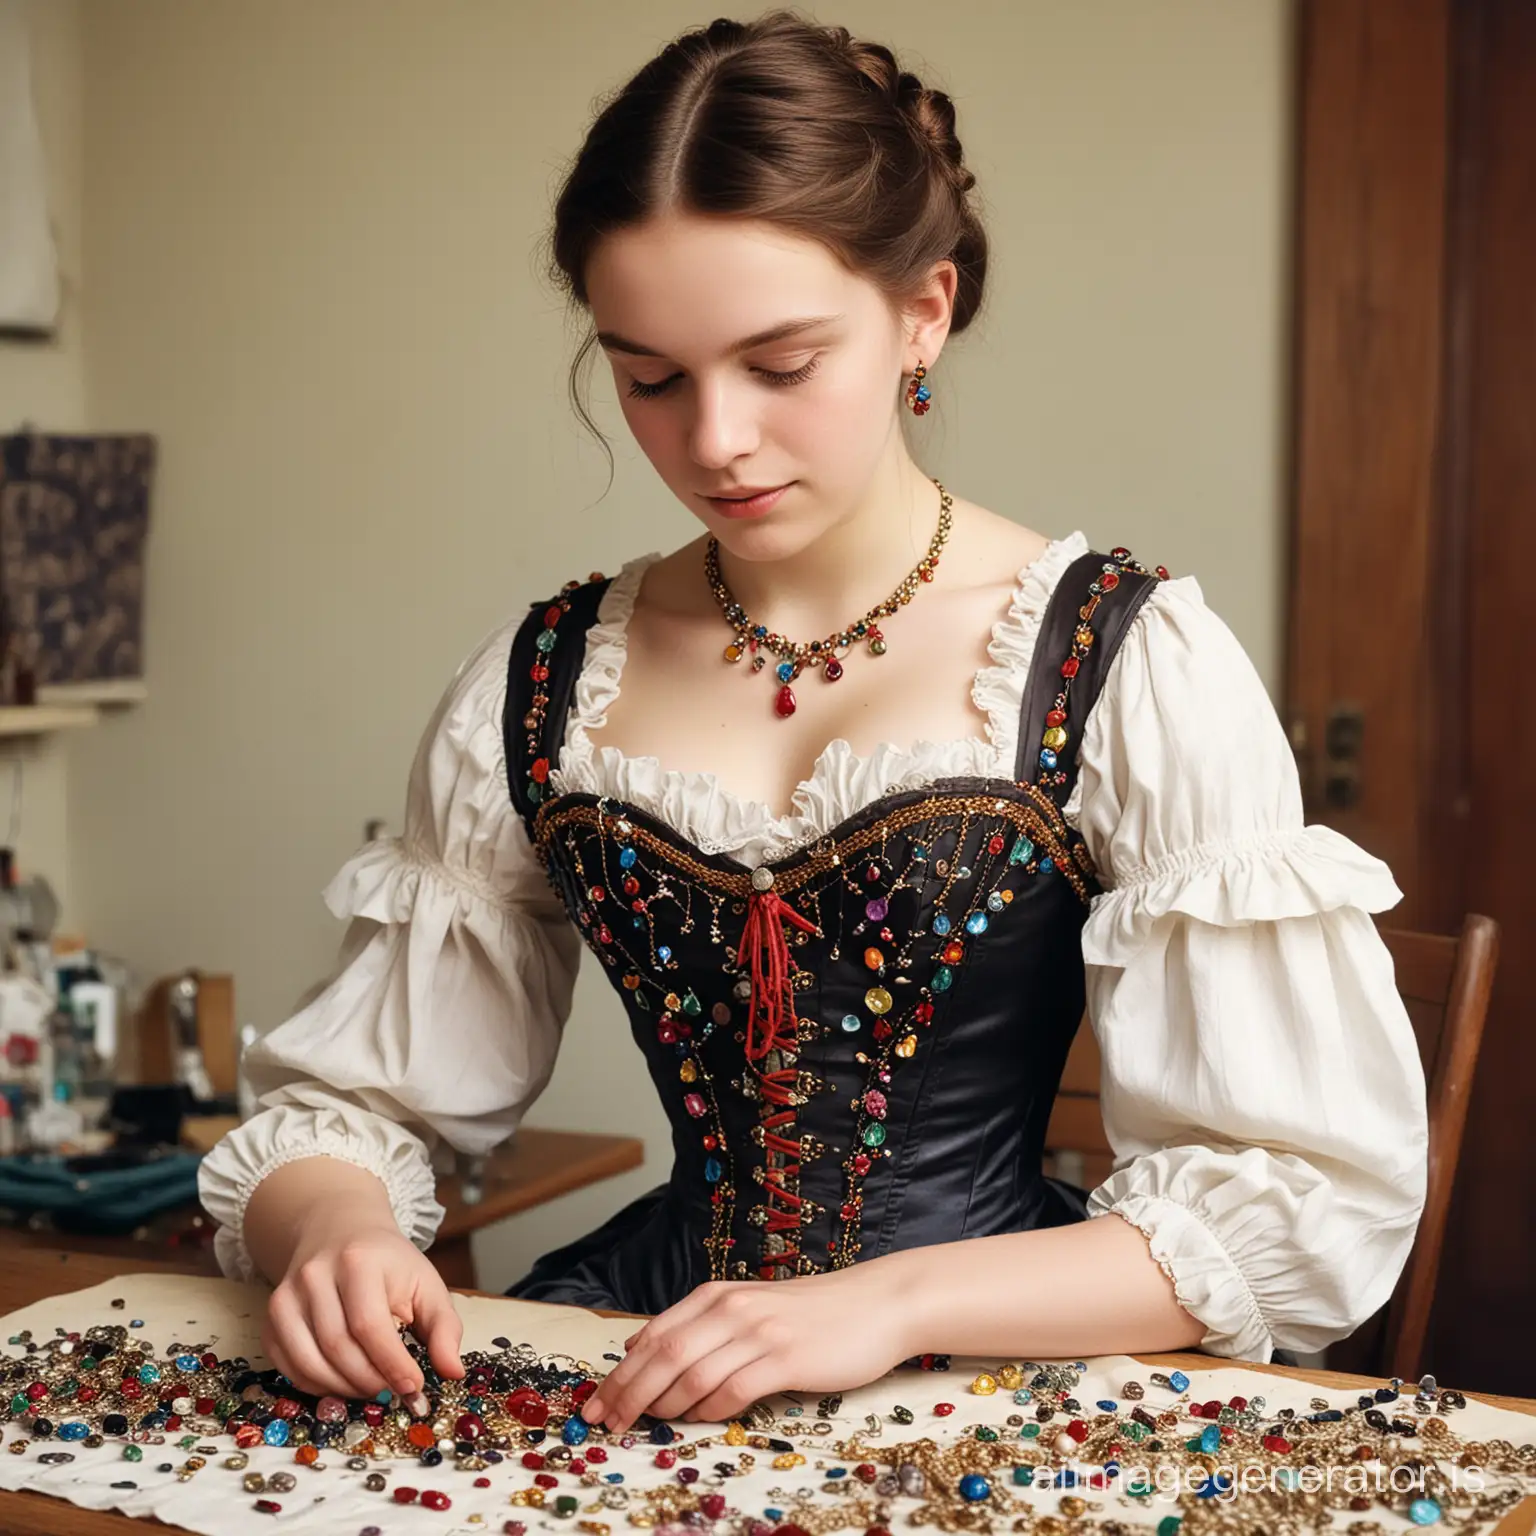 Youthful-Corset-Craftsmanship-in-19th-Century-Europe